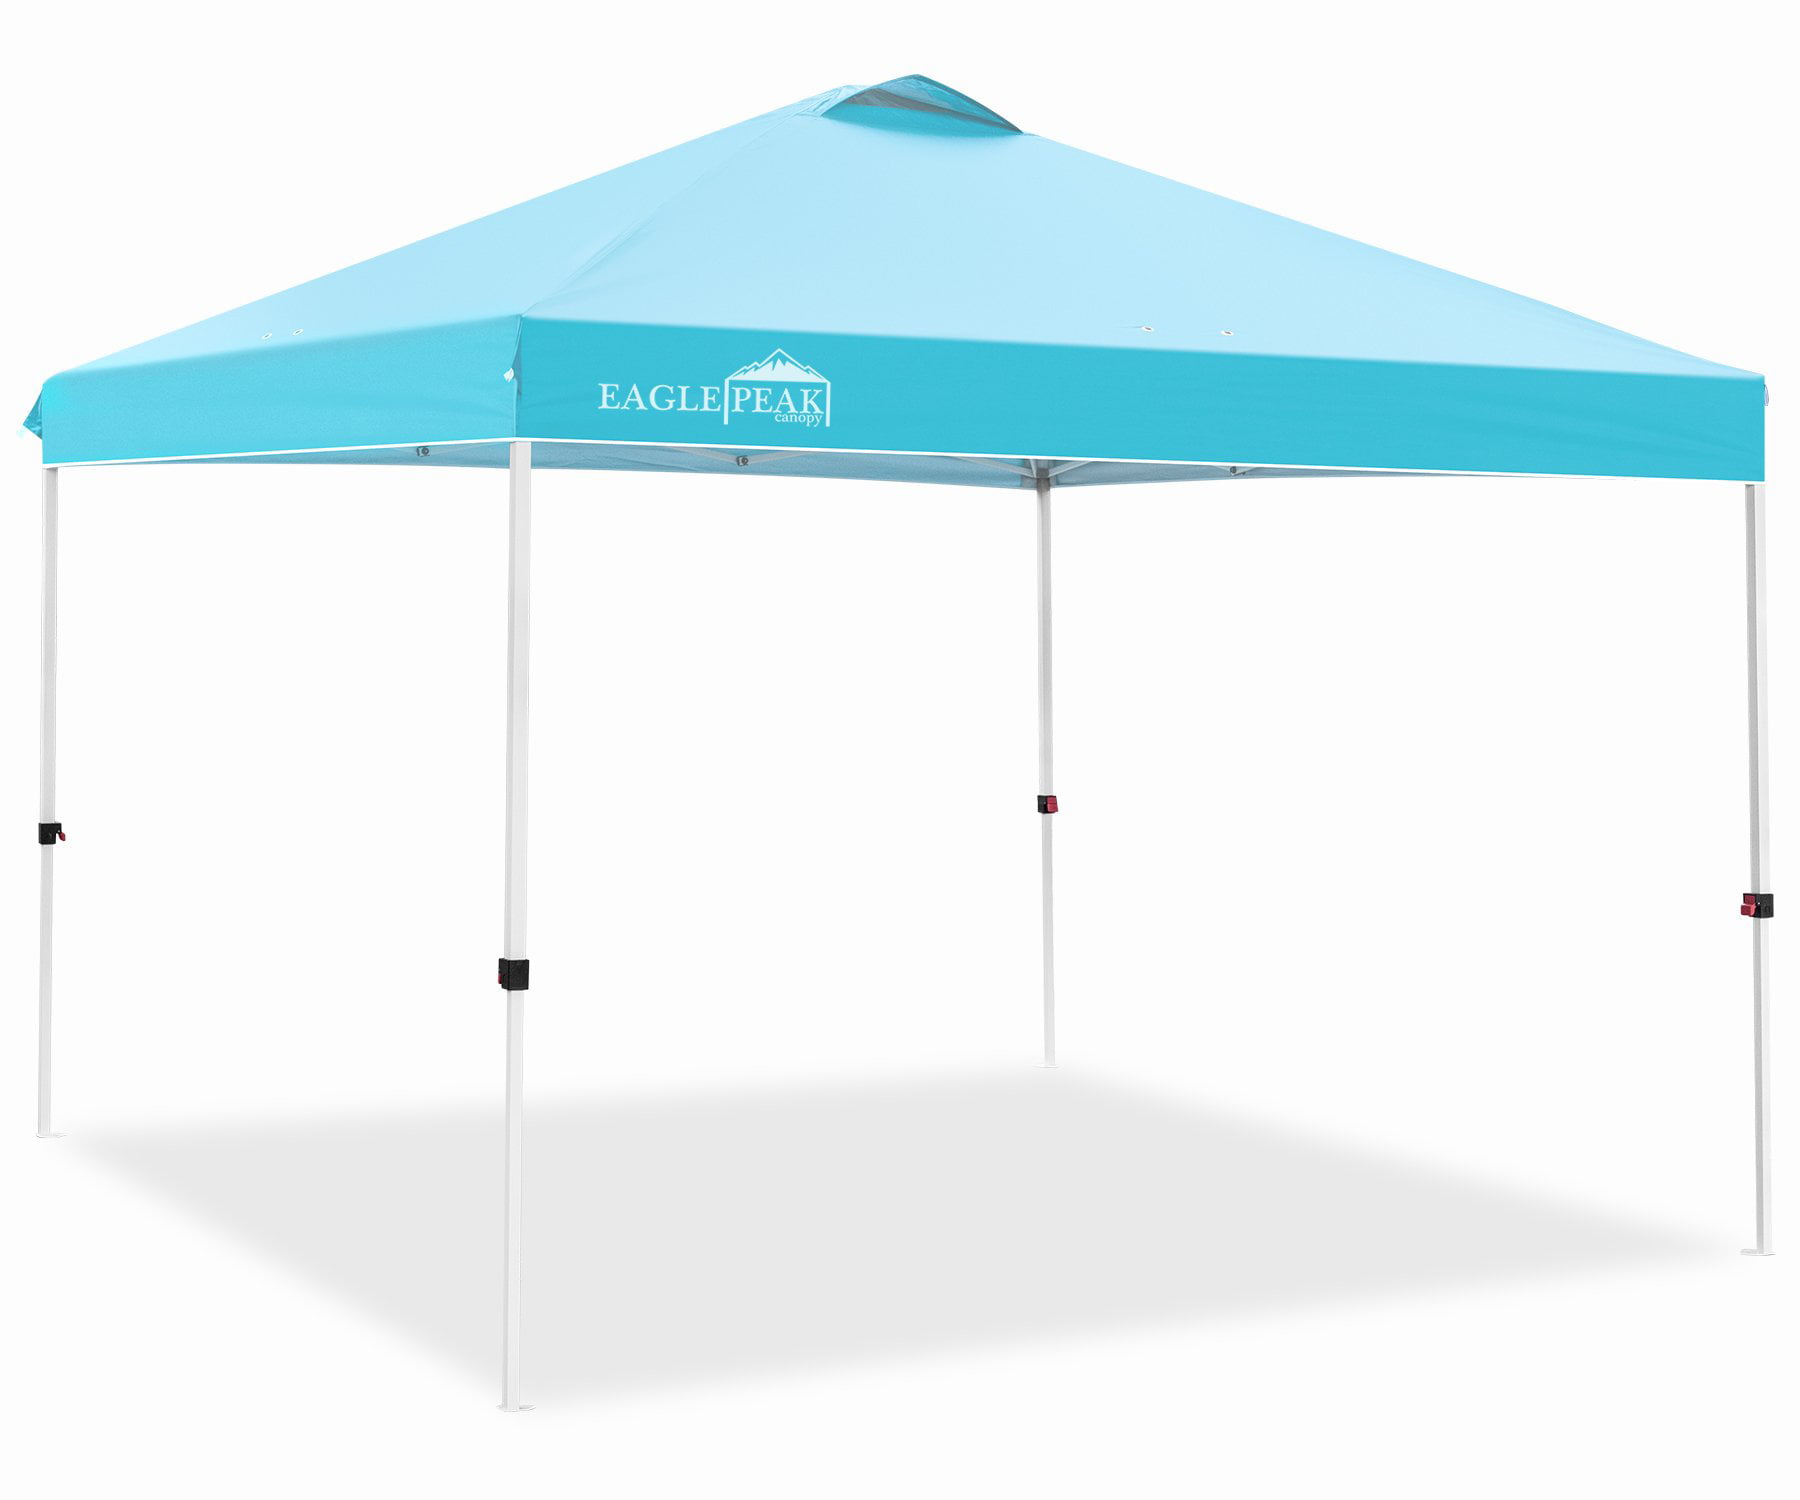 EAGLE PEAK 10’x10' Straight Leg Pop Up Canopy Tent Easy Peak Single Person Setup